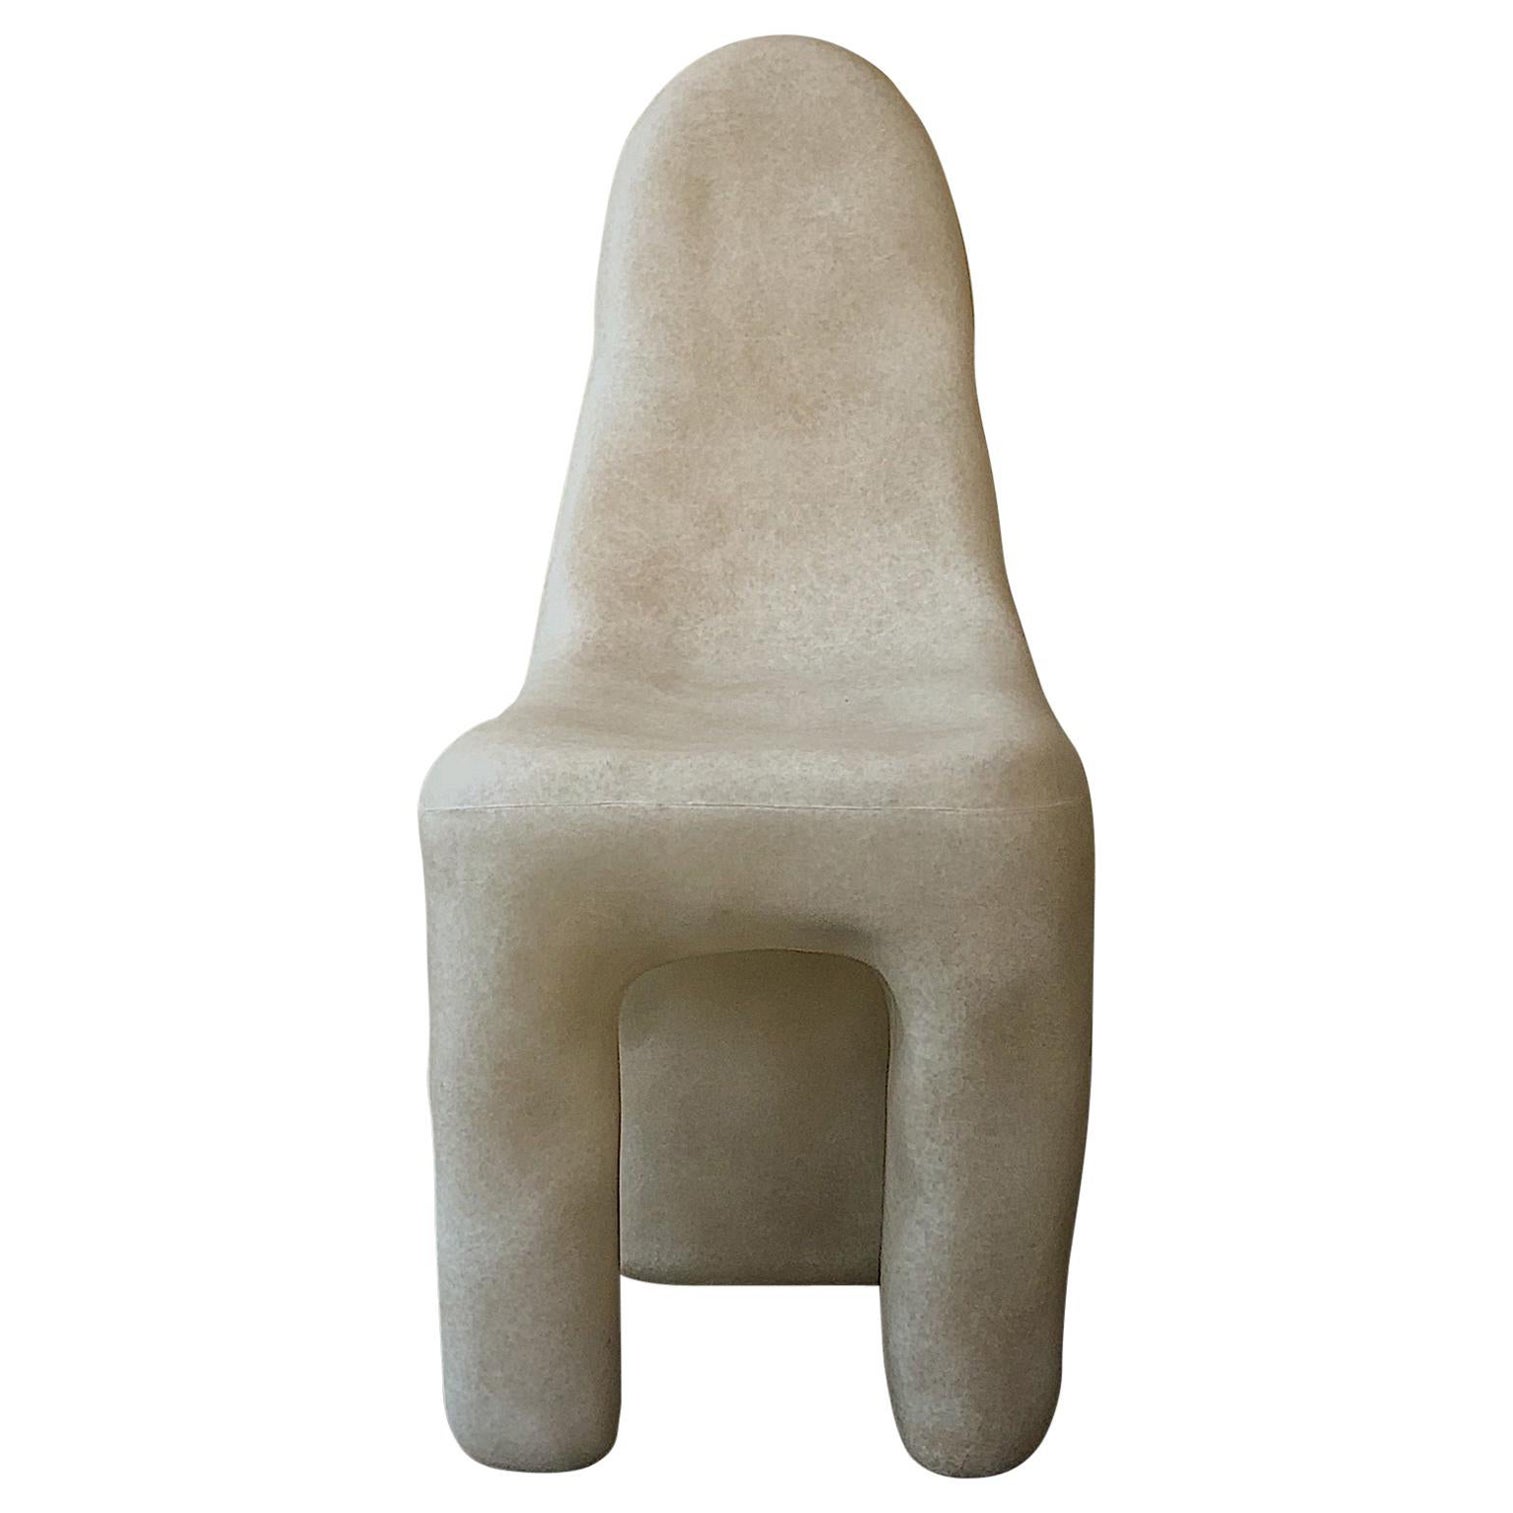 White Playdough Chair by Karstudio